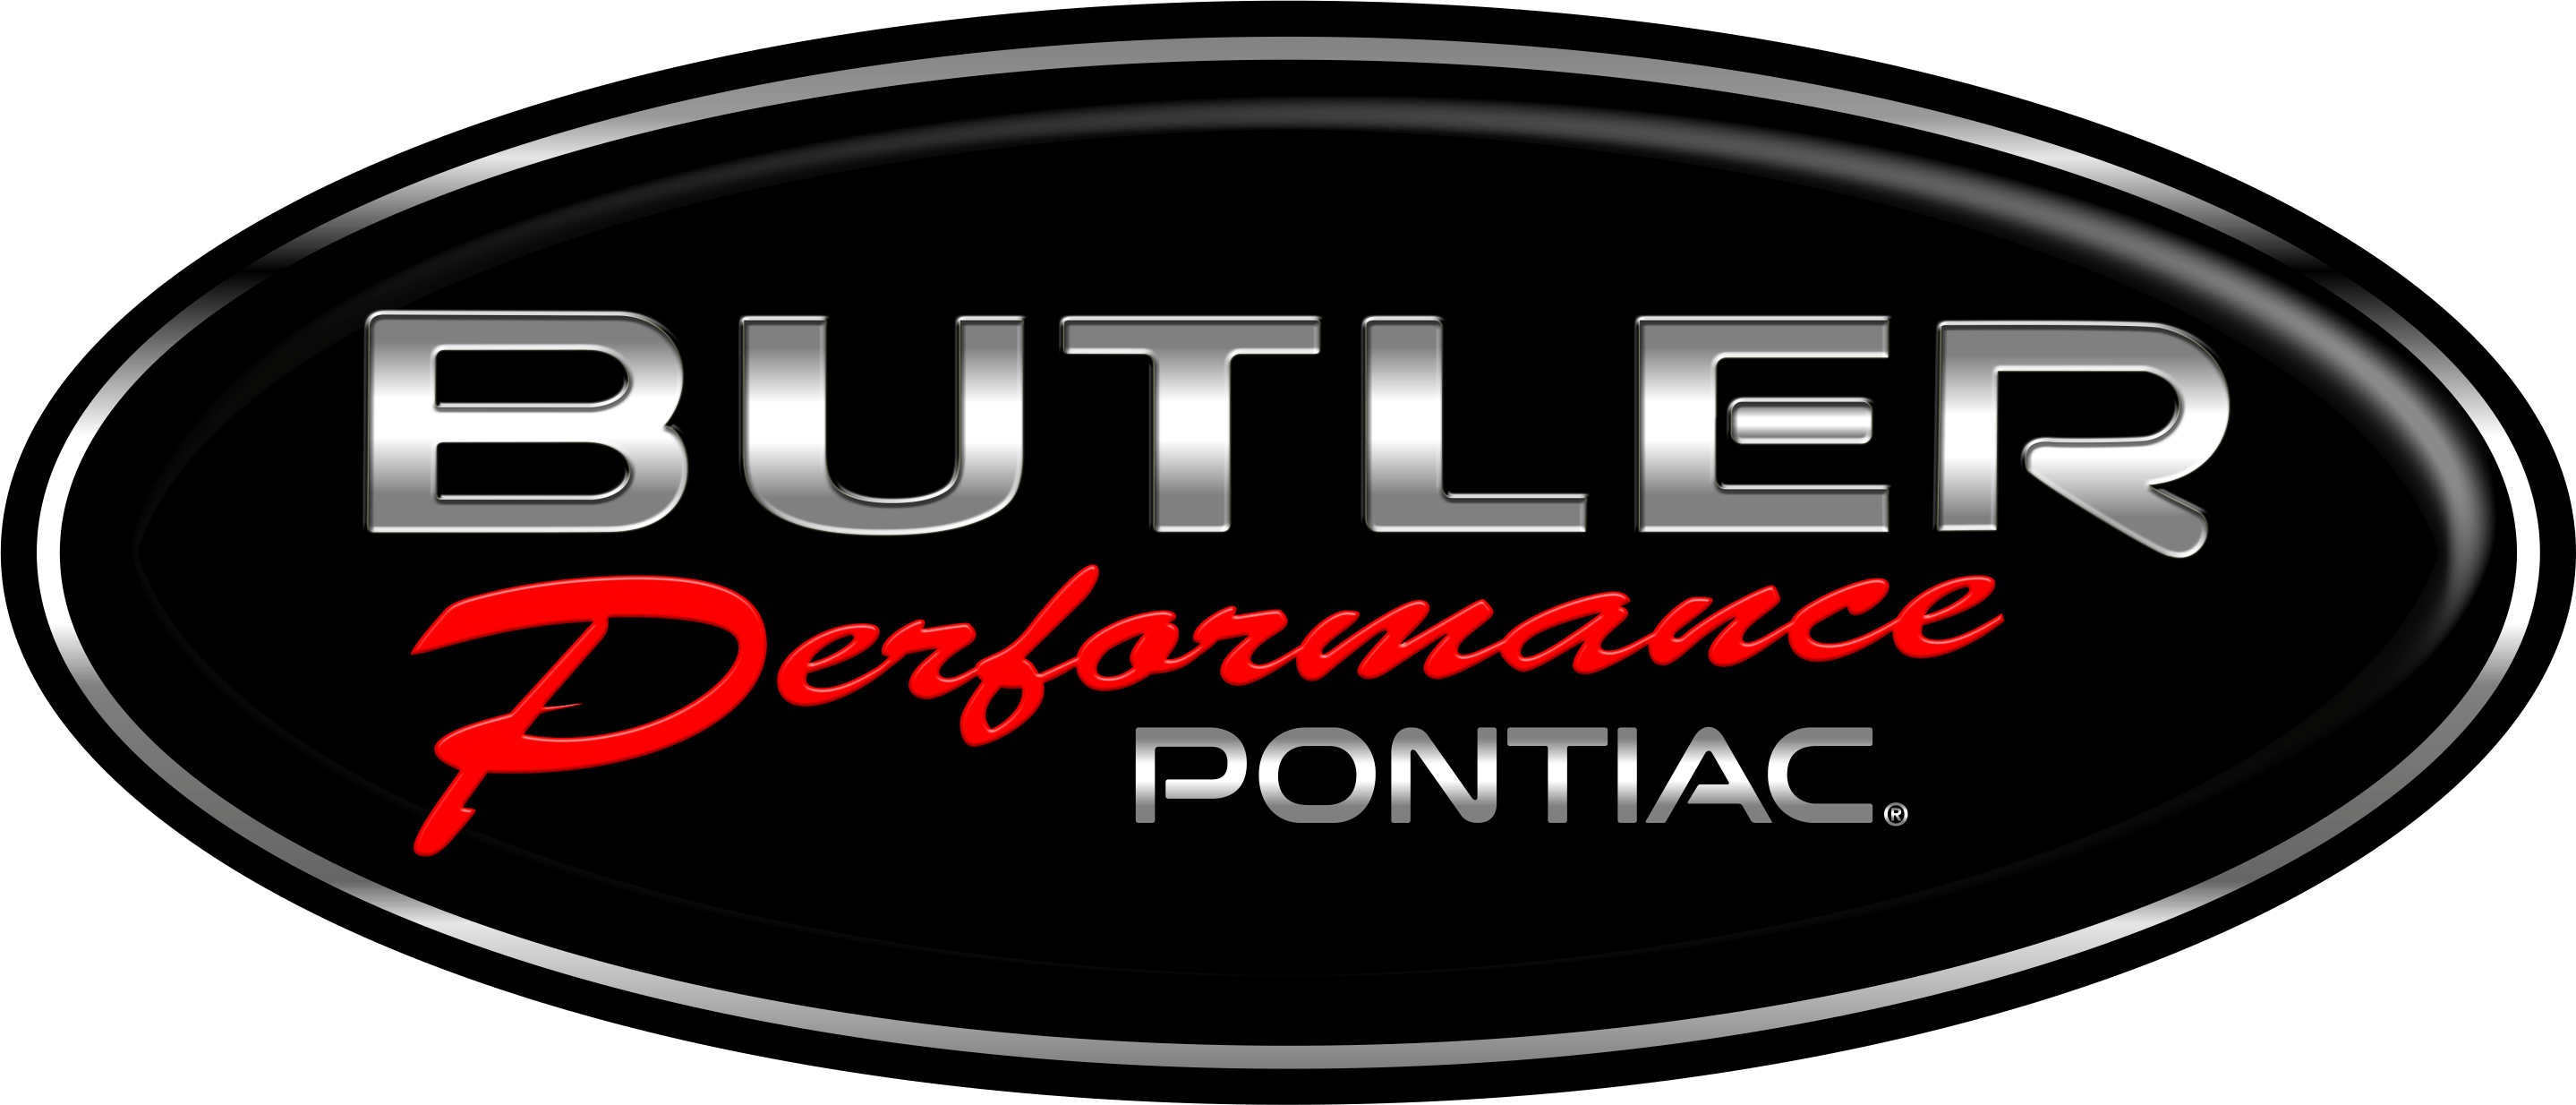 Performance Logo - Butler Performance Logo Black Pontiac Bandit Run. The Bandit Run